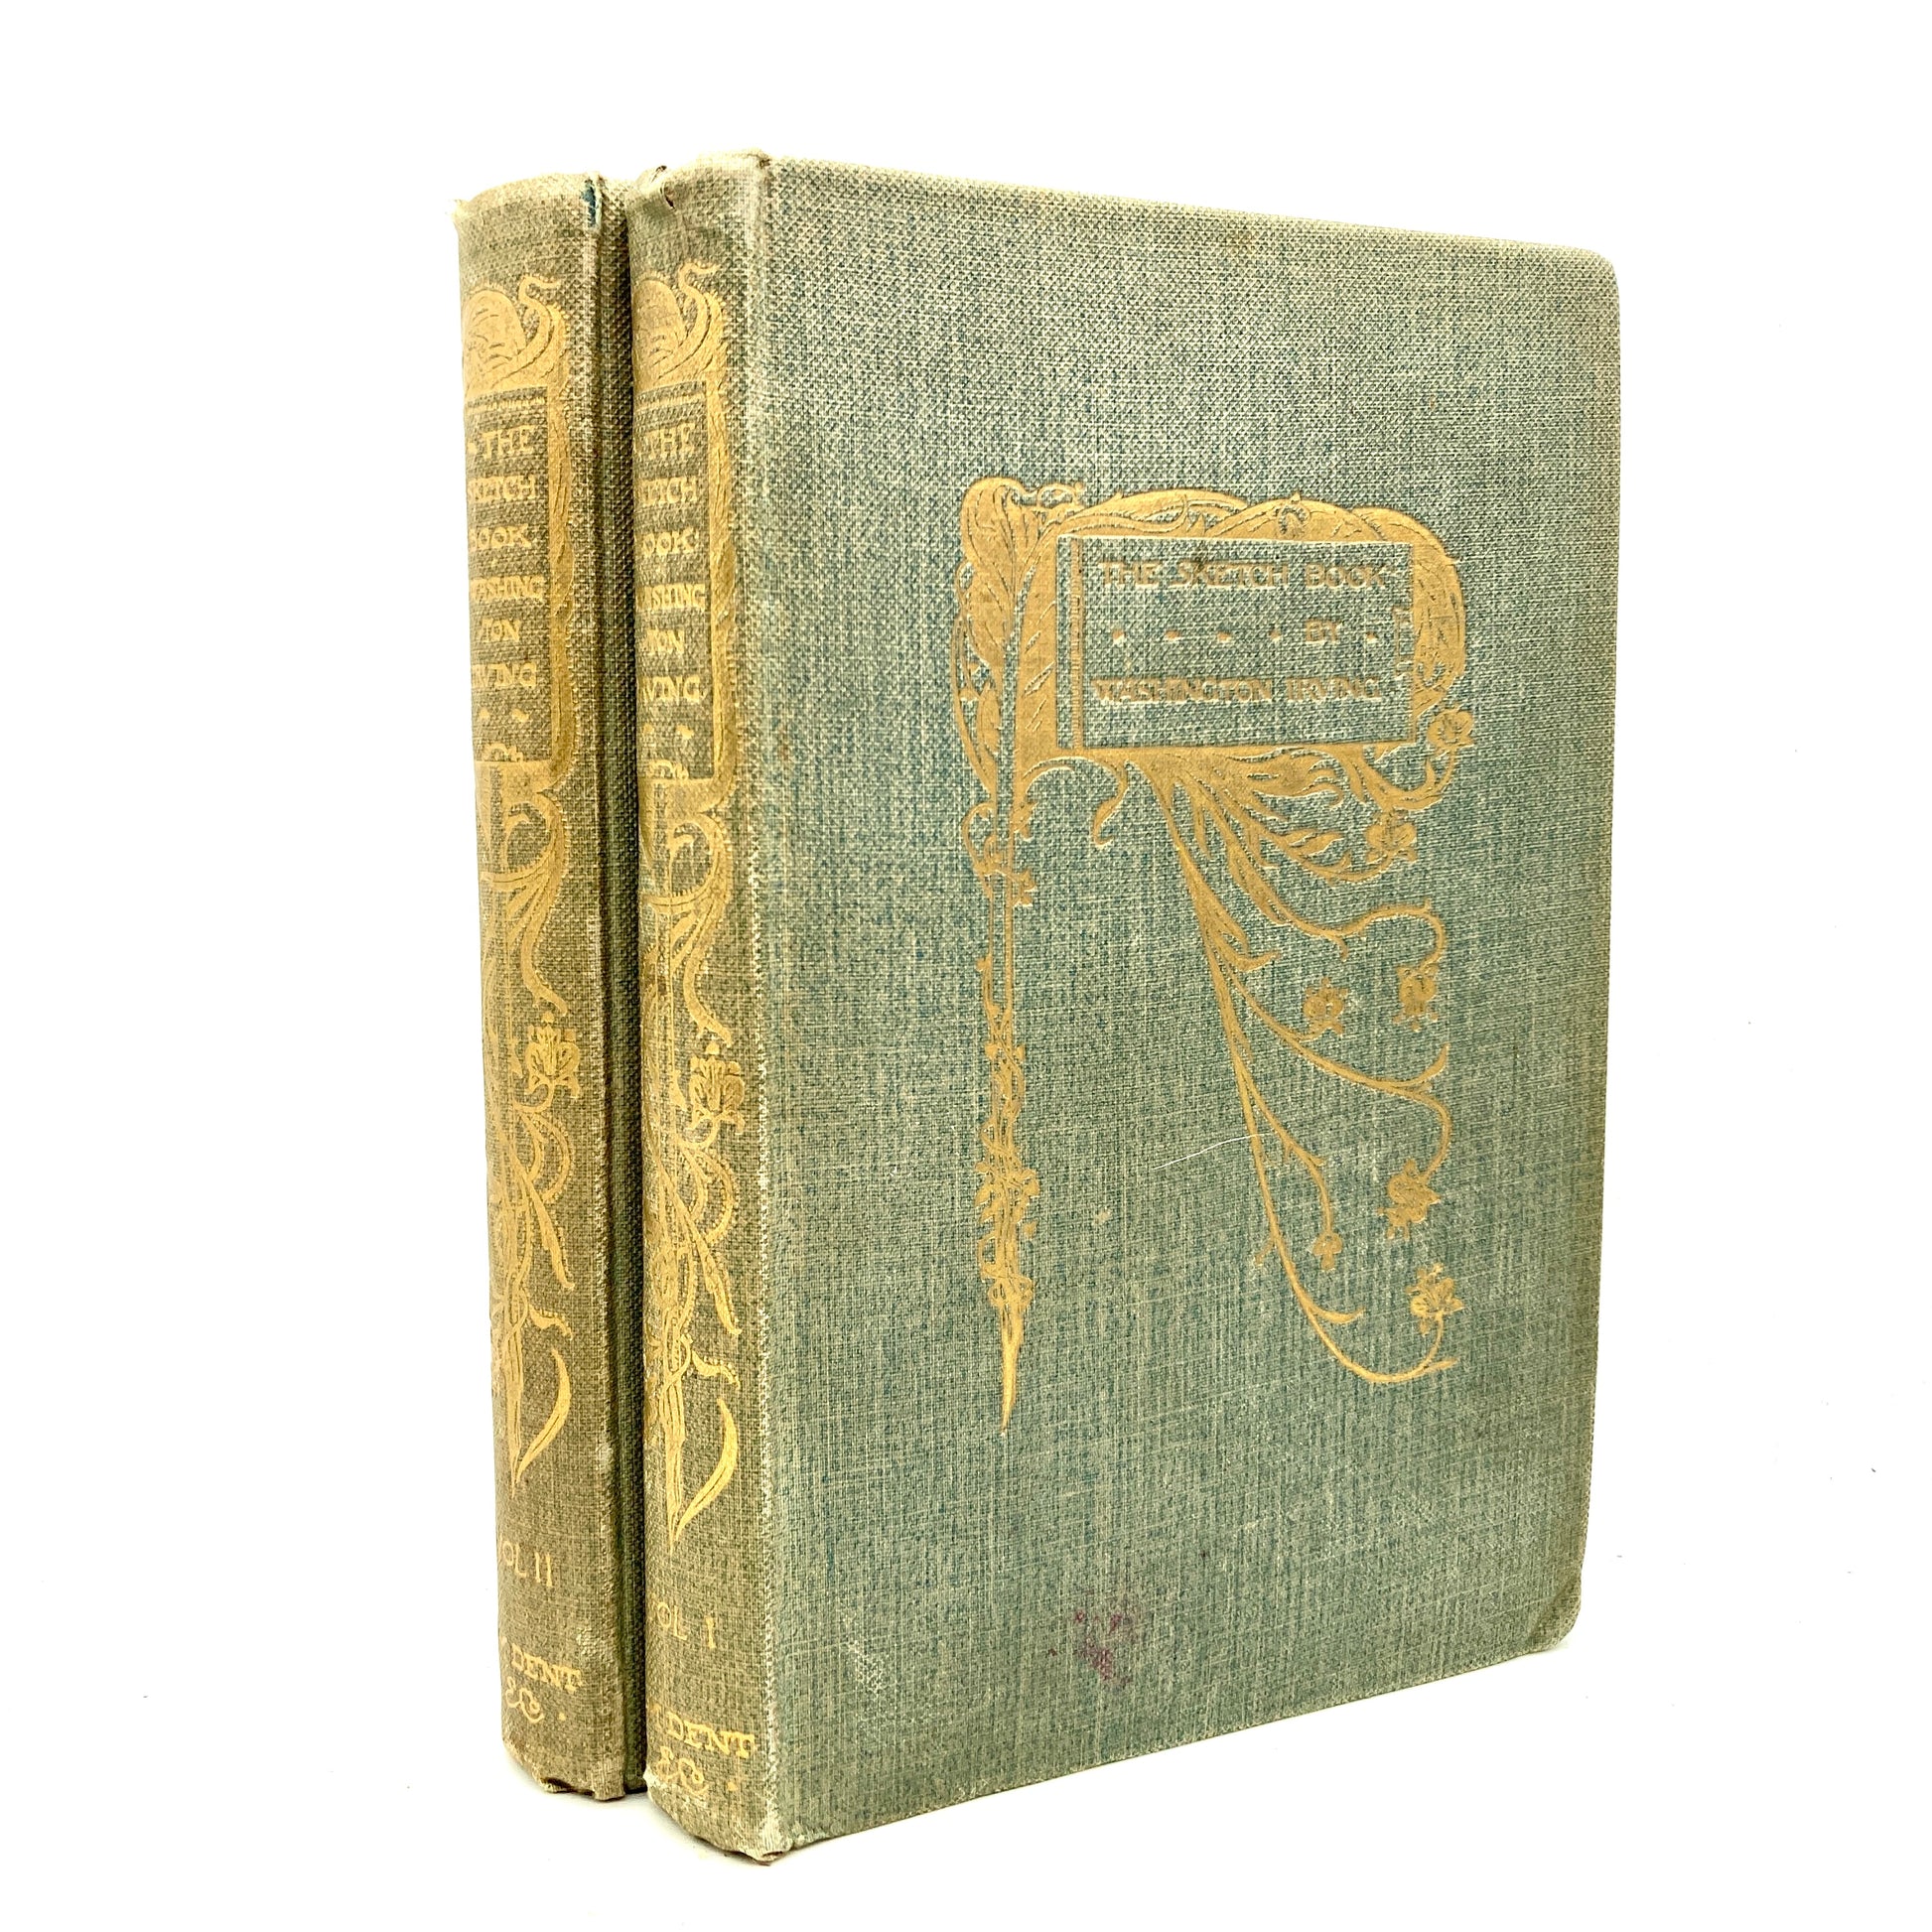 IRVING, Washington "The Sketch-Book of Geoffrey Crayon" [J.M. Dent, 1894] - Buzz Bookstore